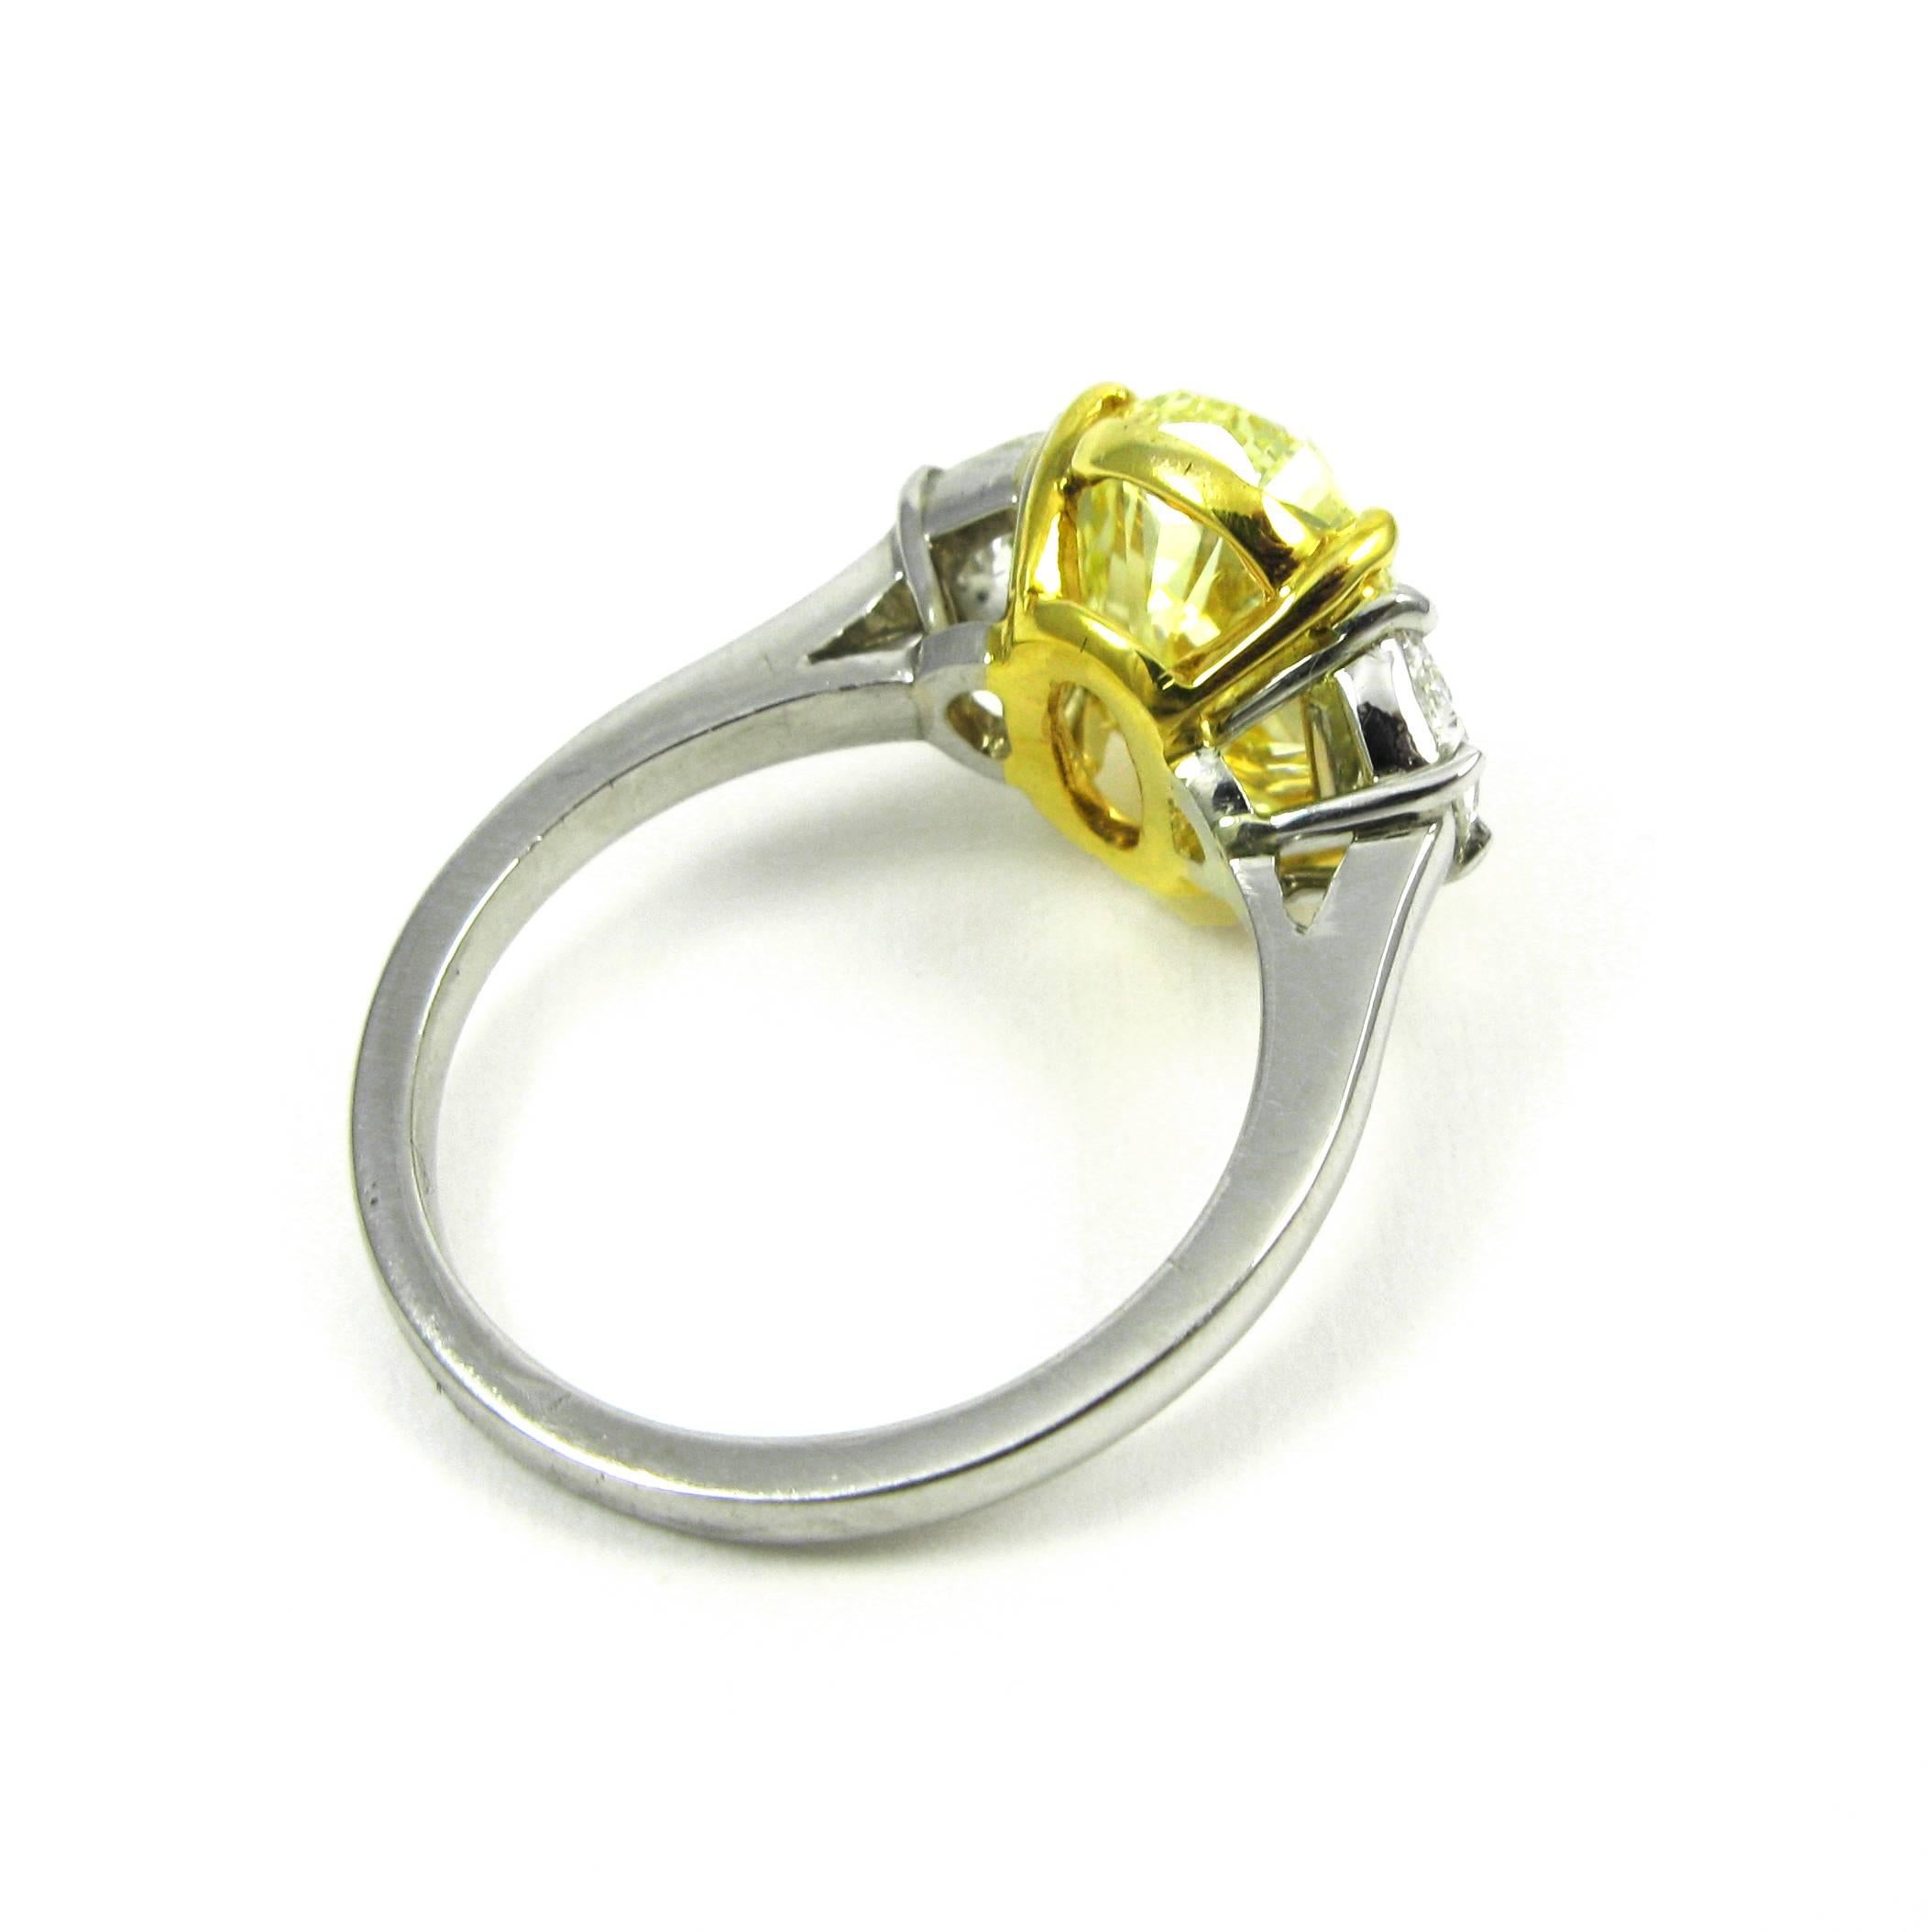 Stunning GIA Certified 4.61 Carat Fancy Intense Yellow Oval Diamond Ring 1